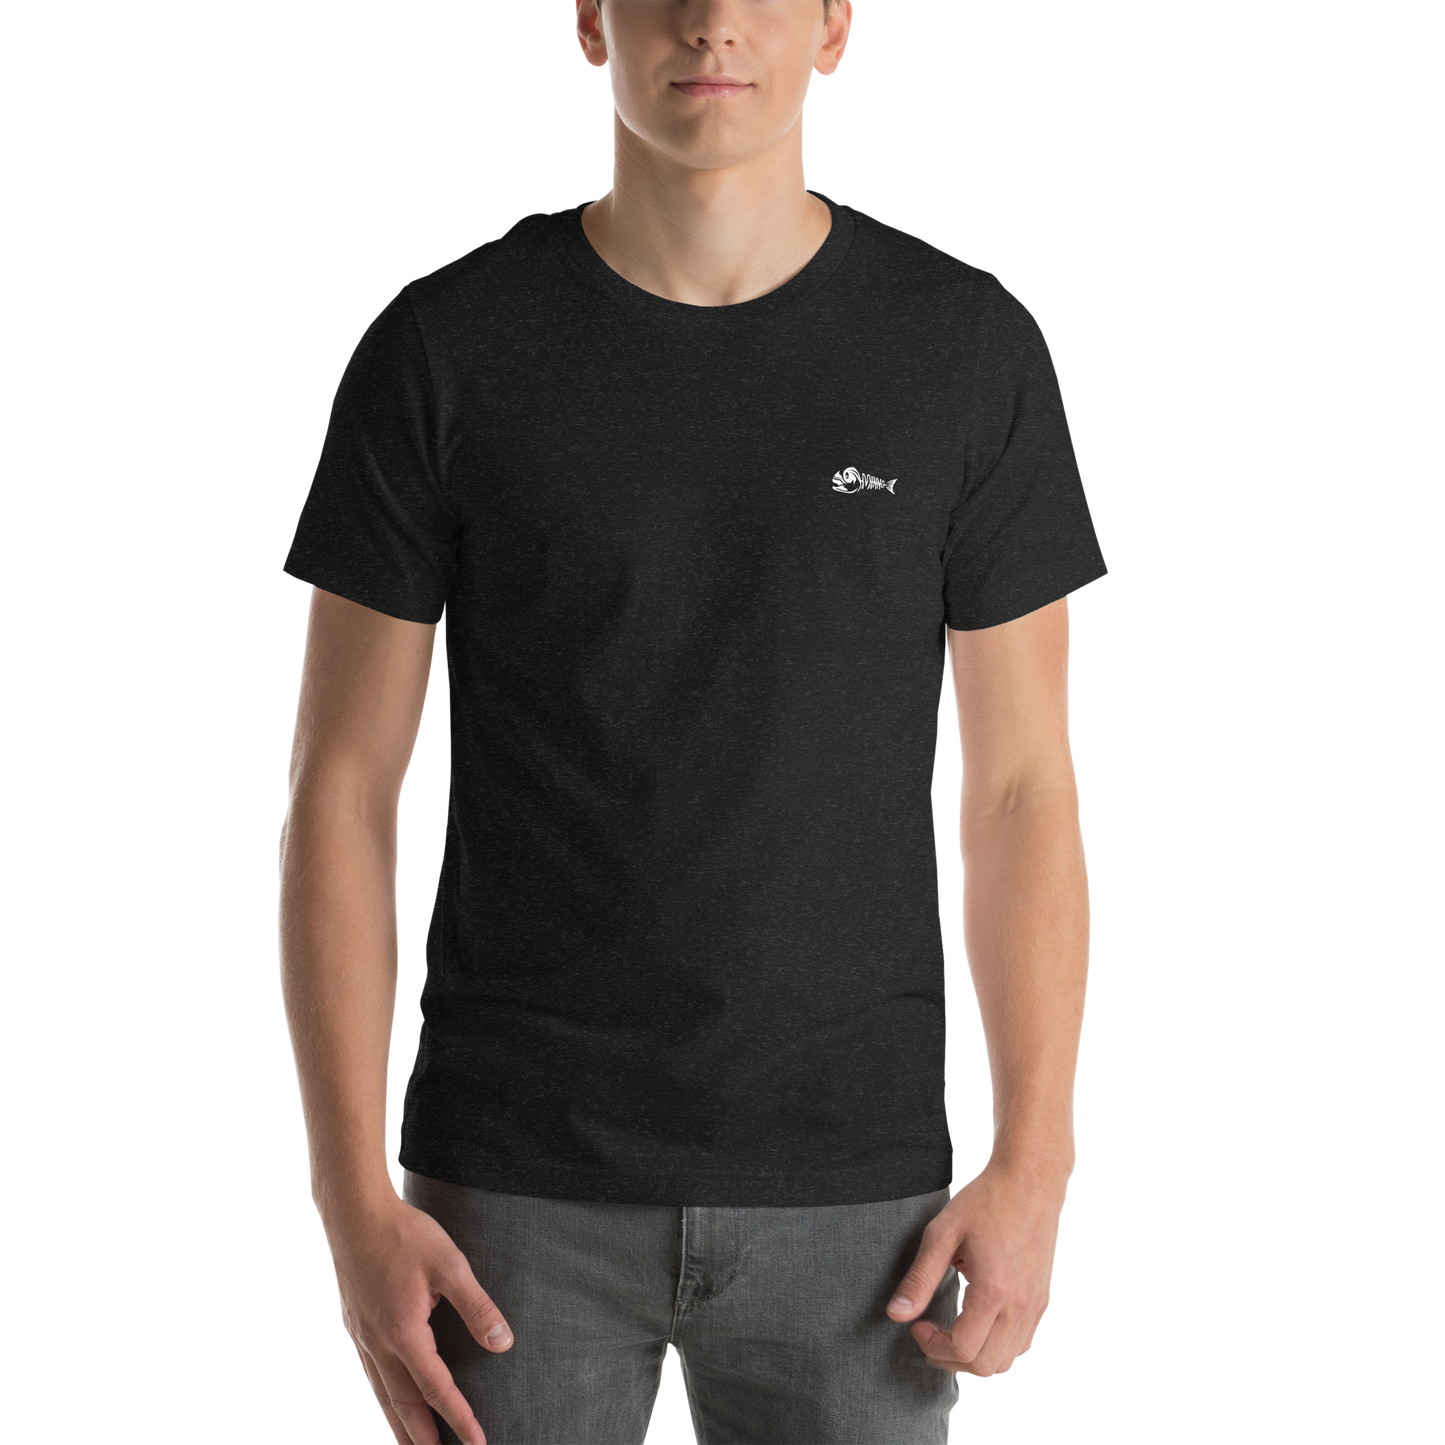 Minno Unisex T-shirt - Footy